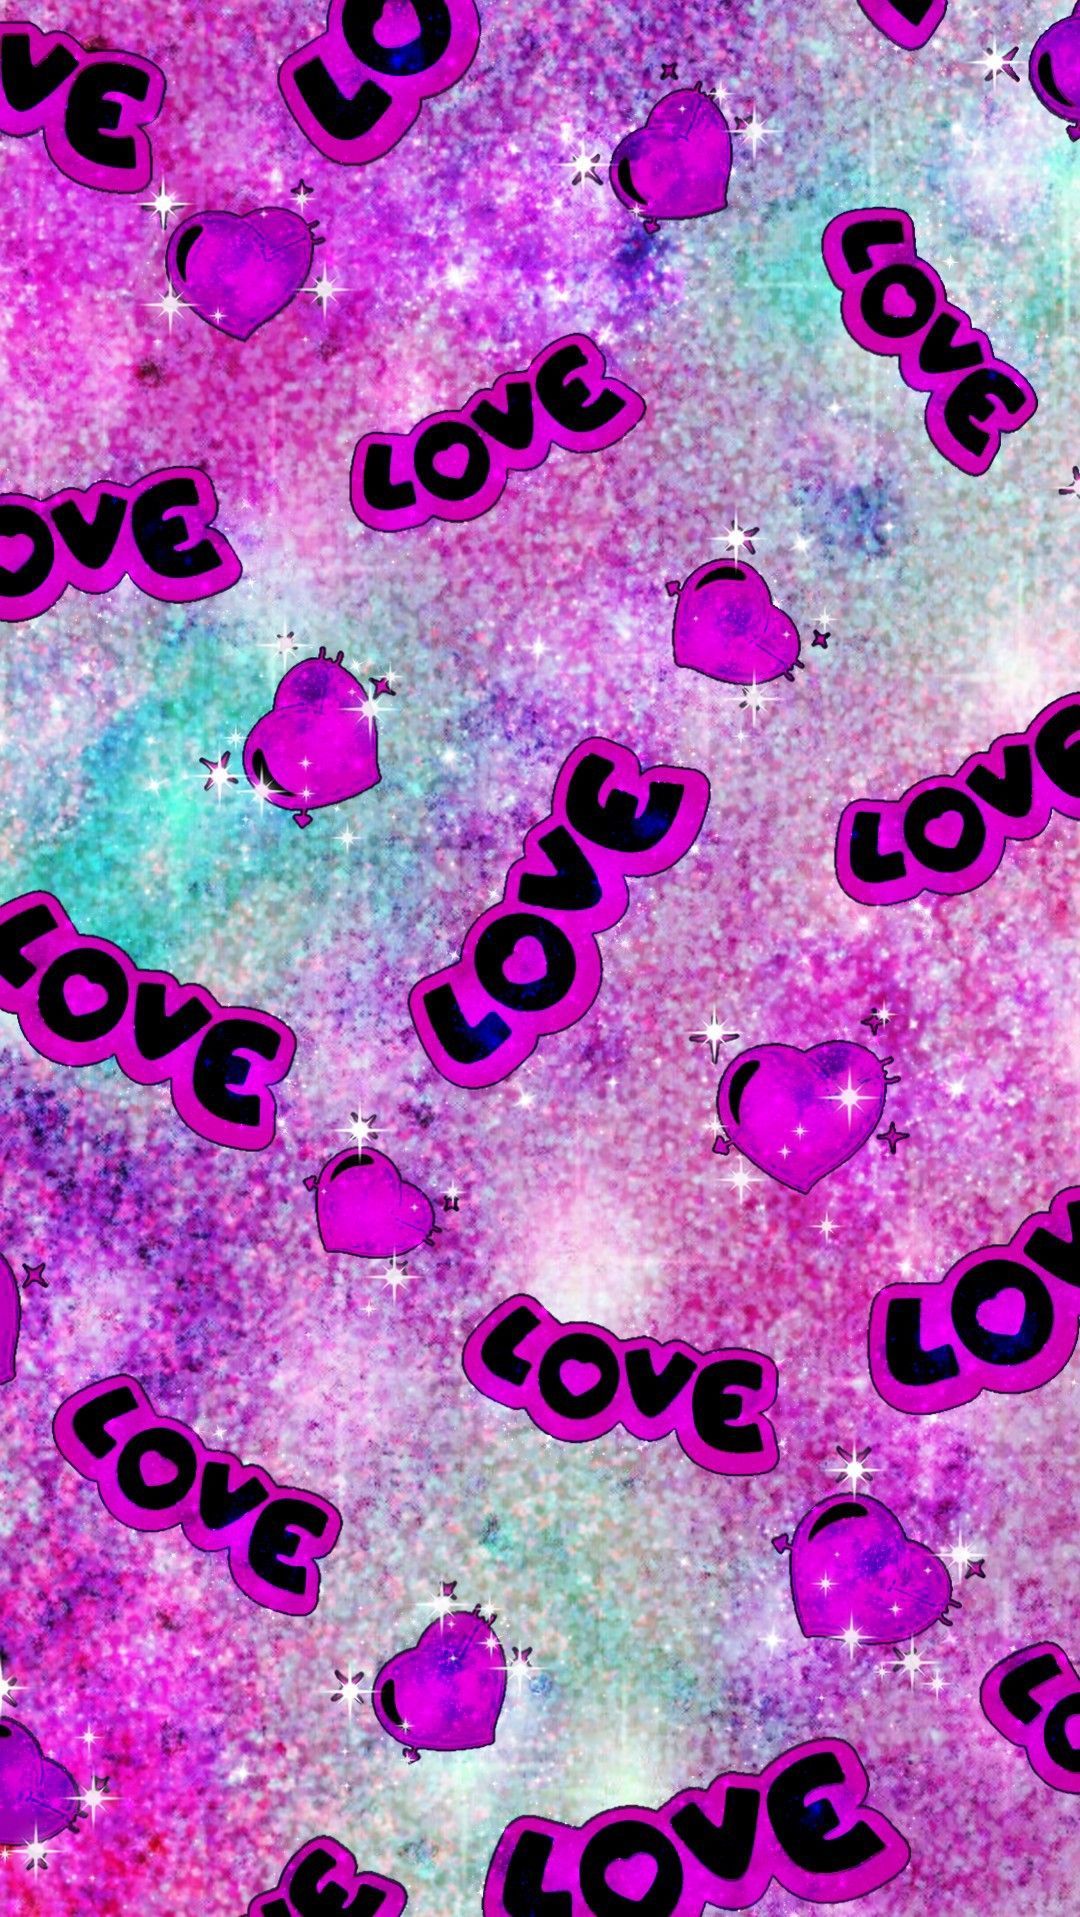 Glittery Love Hearts, made by me #patterns #purple #glitter #sparkles #galaxy #wallpape. Glitter phone wallpaper, iPhone wallpaper glitter, Pink glitter wallpaper